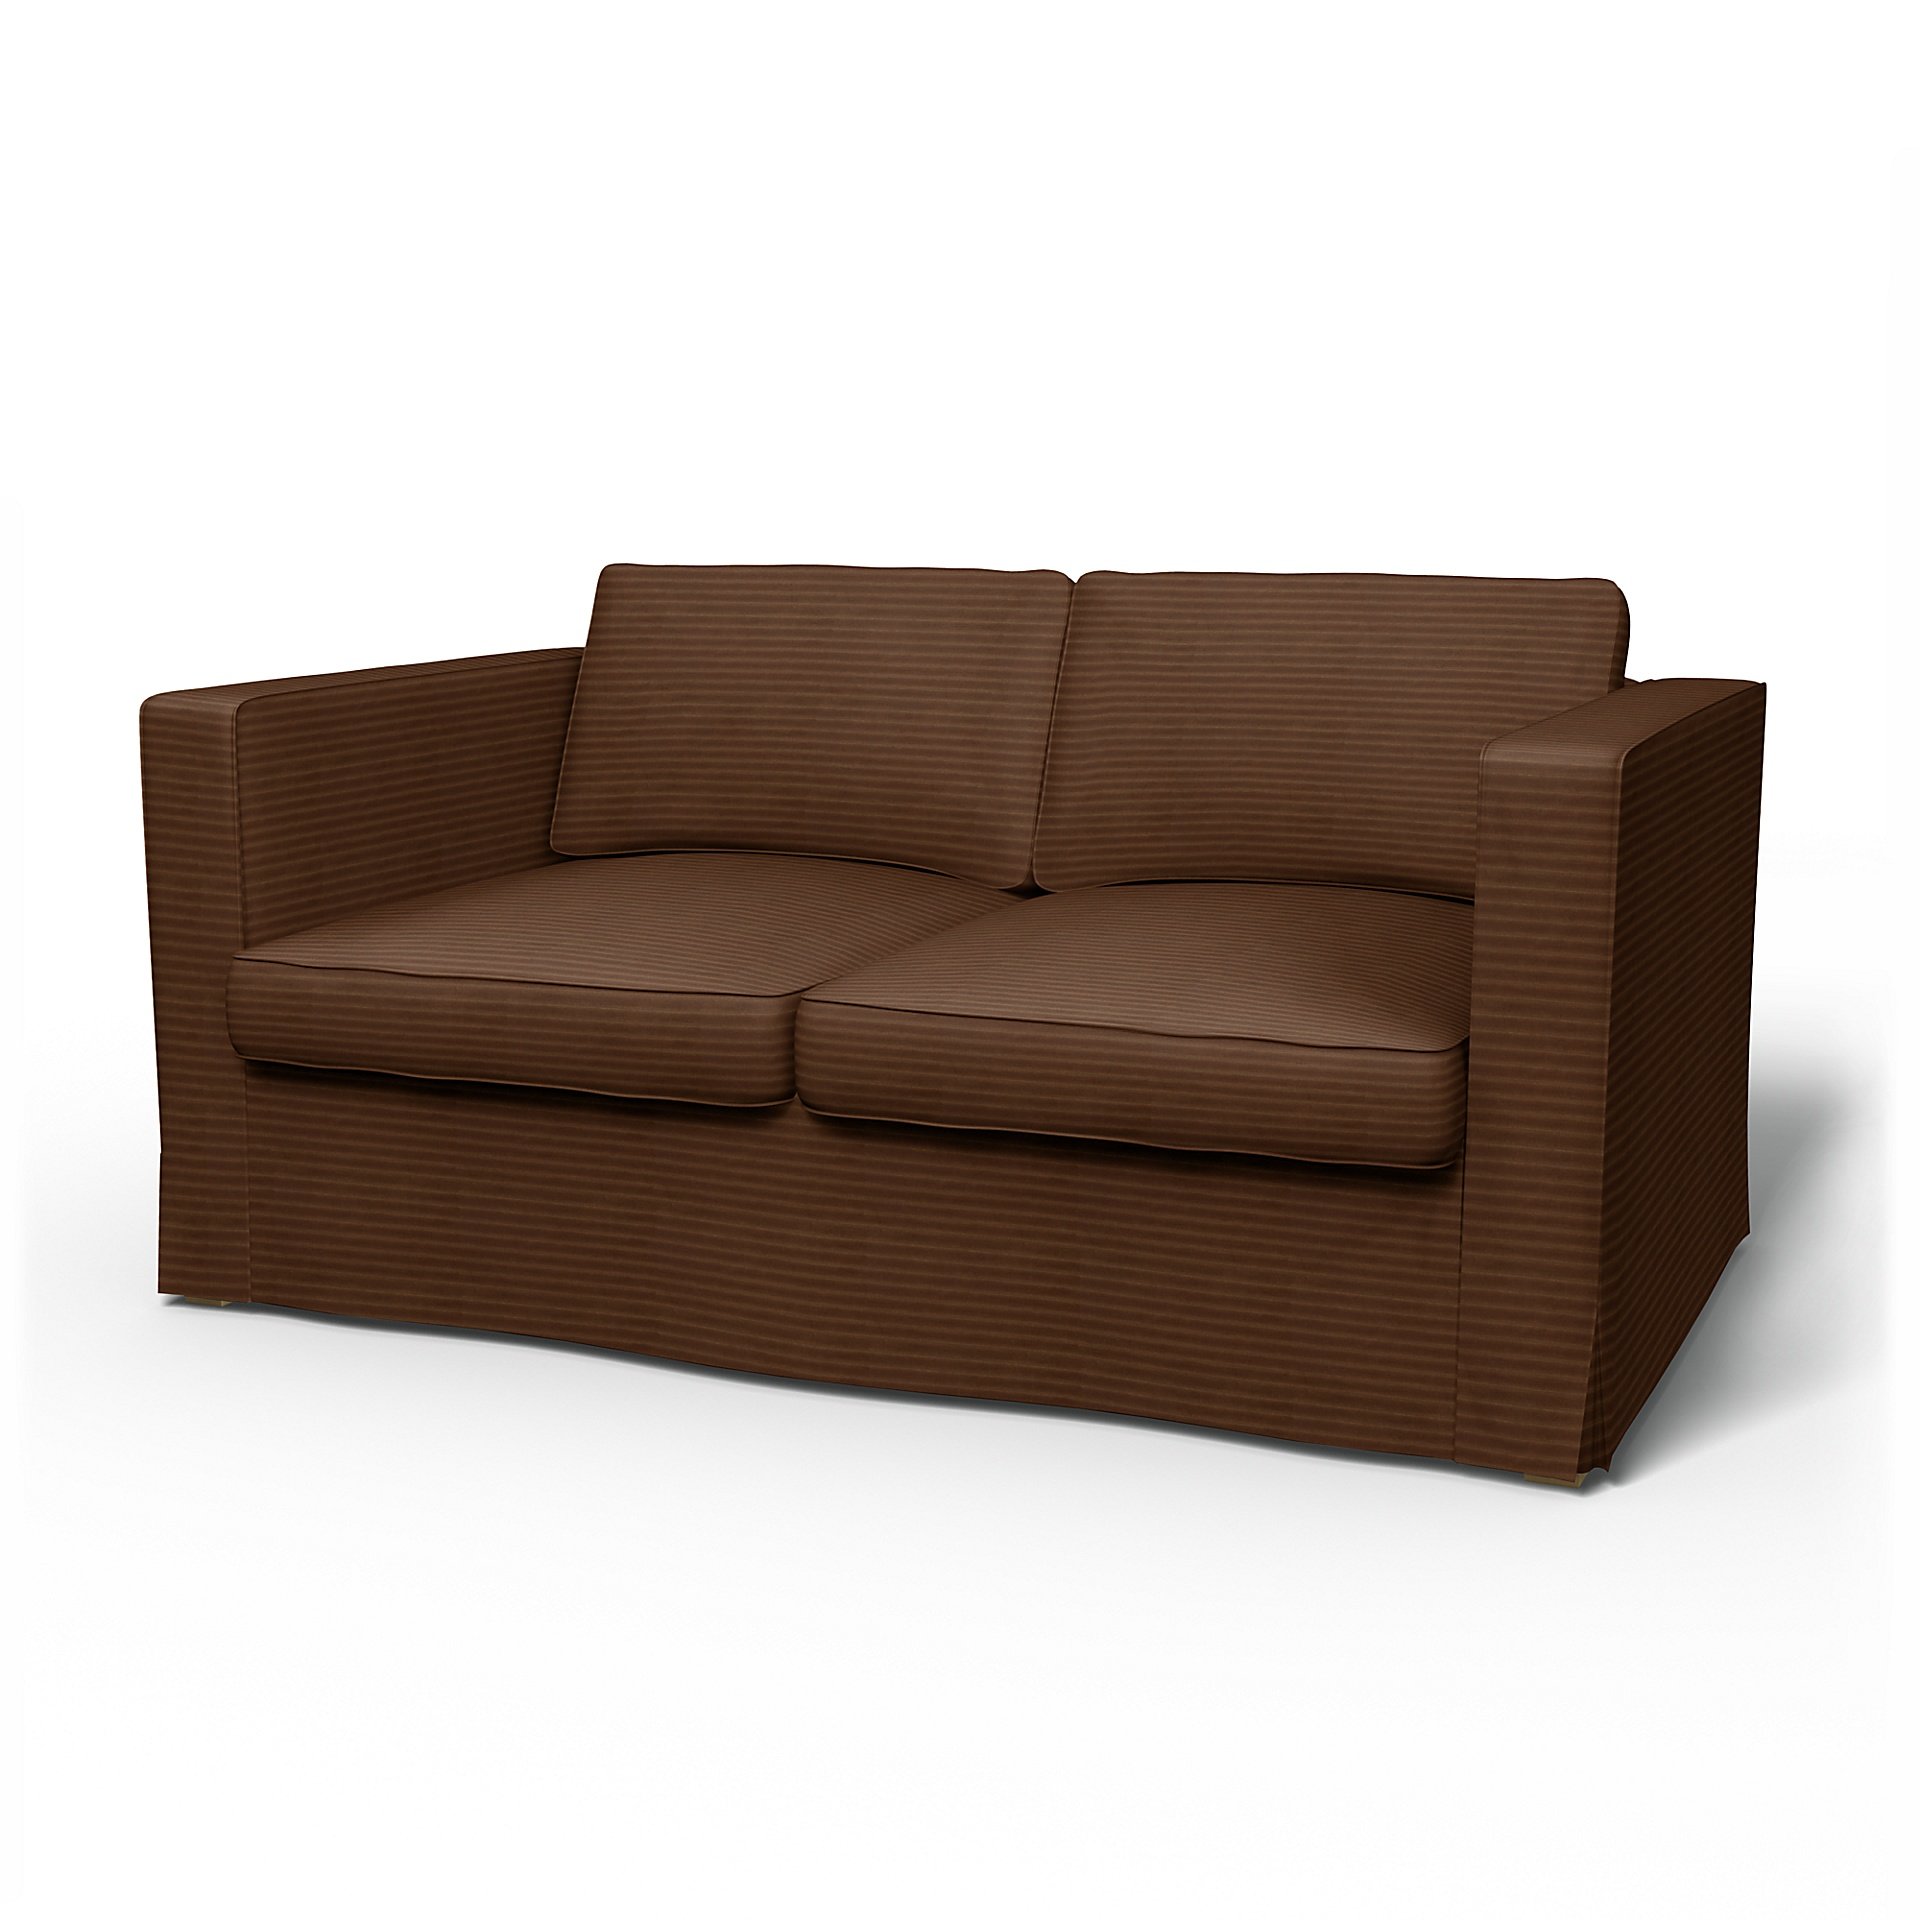 IKEA - Karlanda 2 Seater Sofa Cover, Chocolate Brown, Corduroy - Bemz